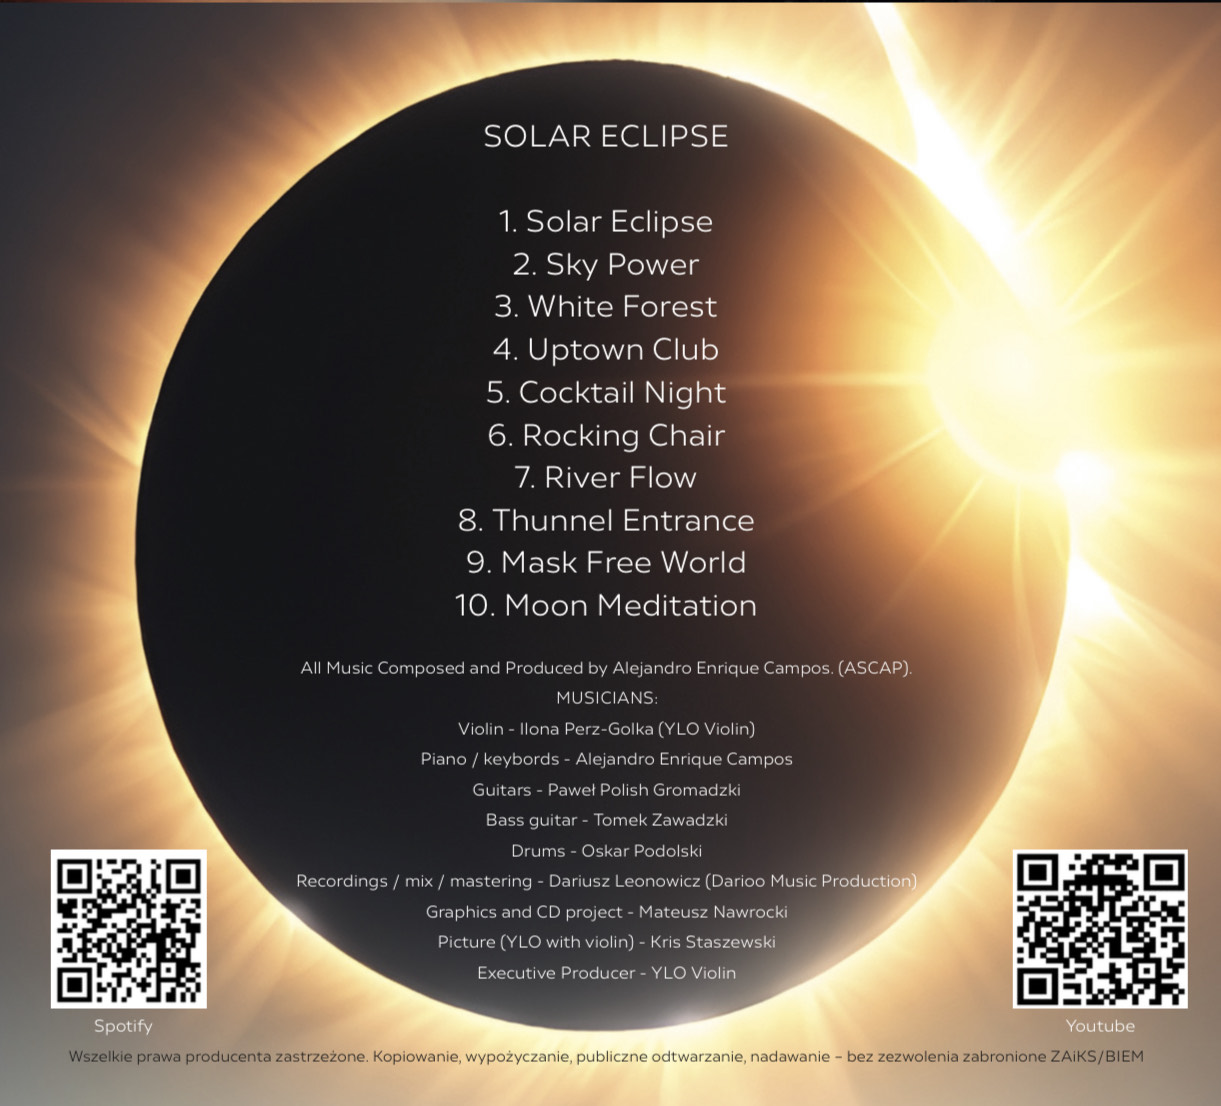 Solar Eclipse CD Album - YLO Violin Back image JPG